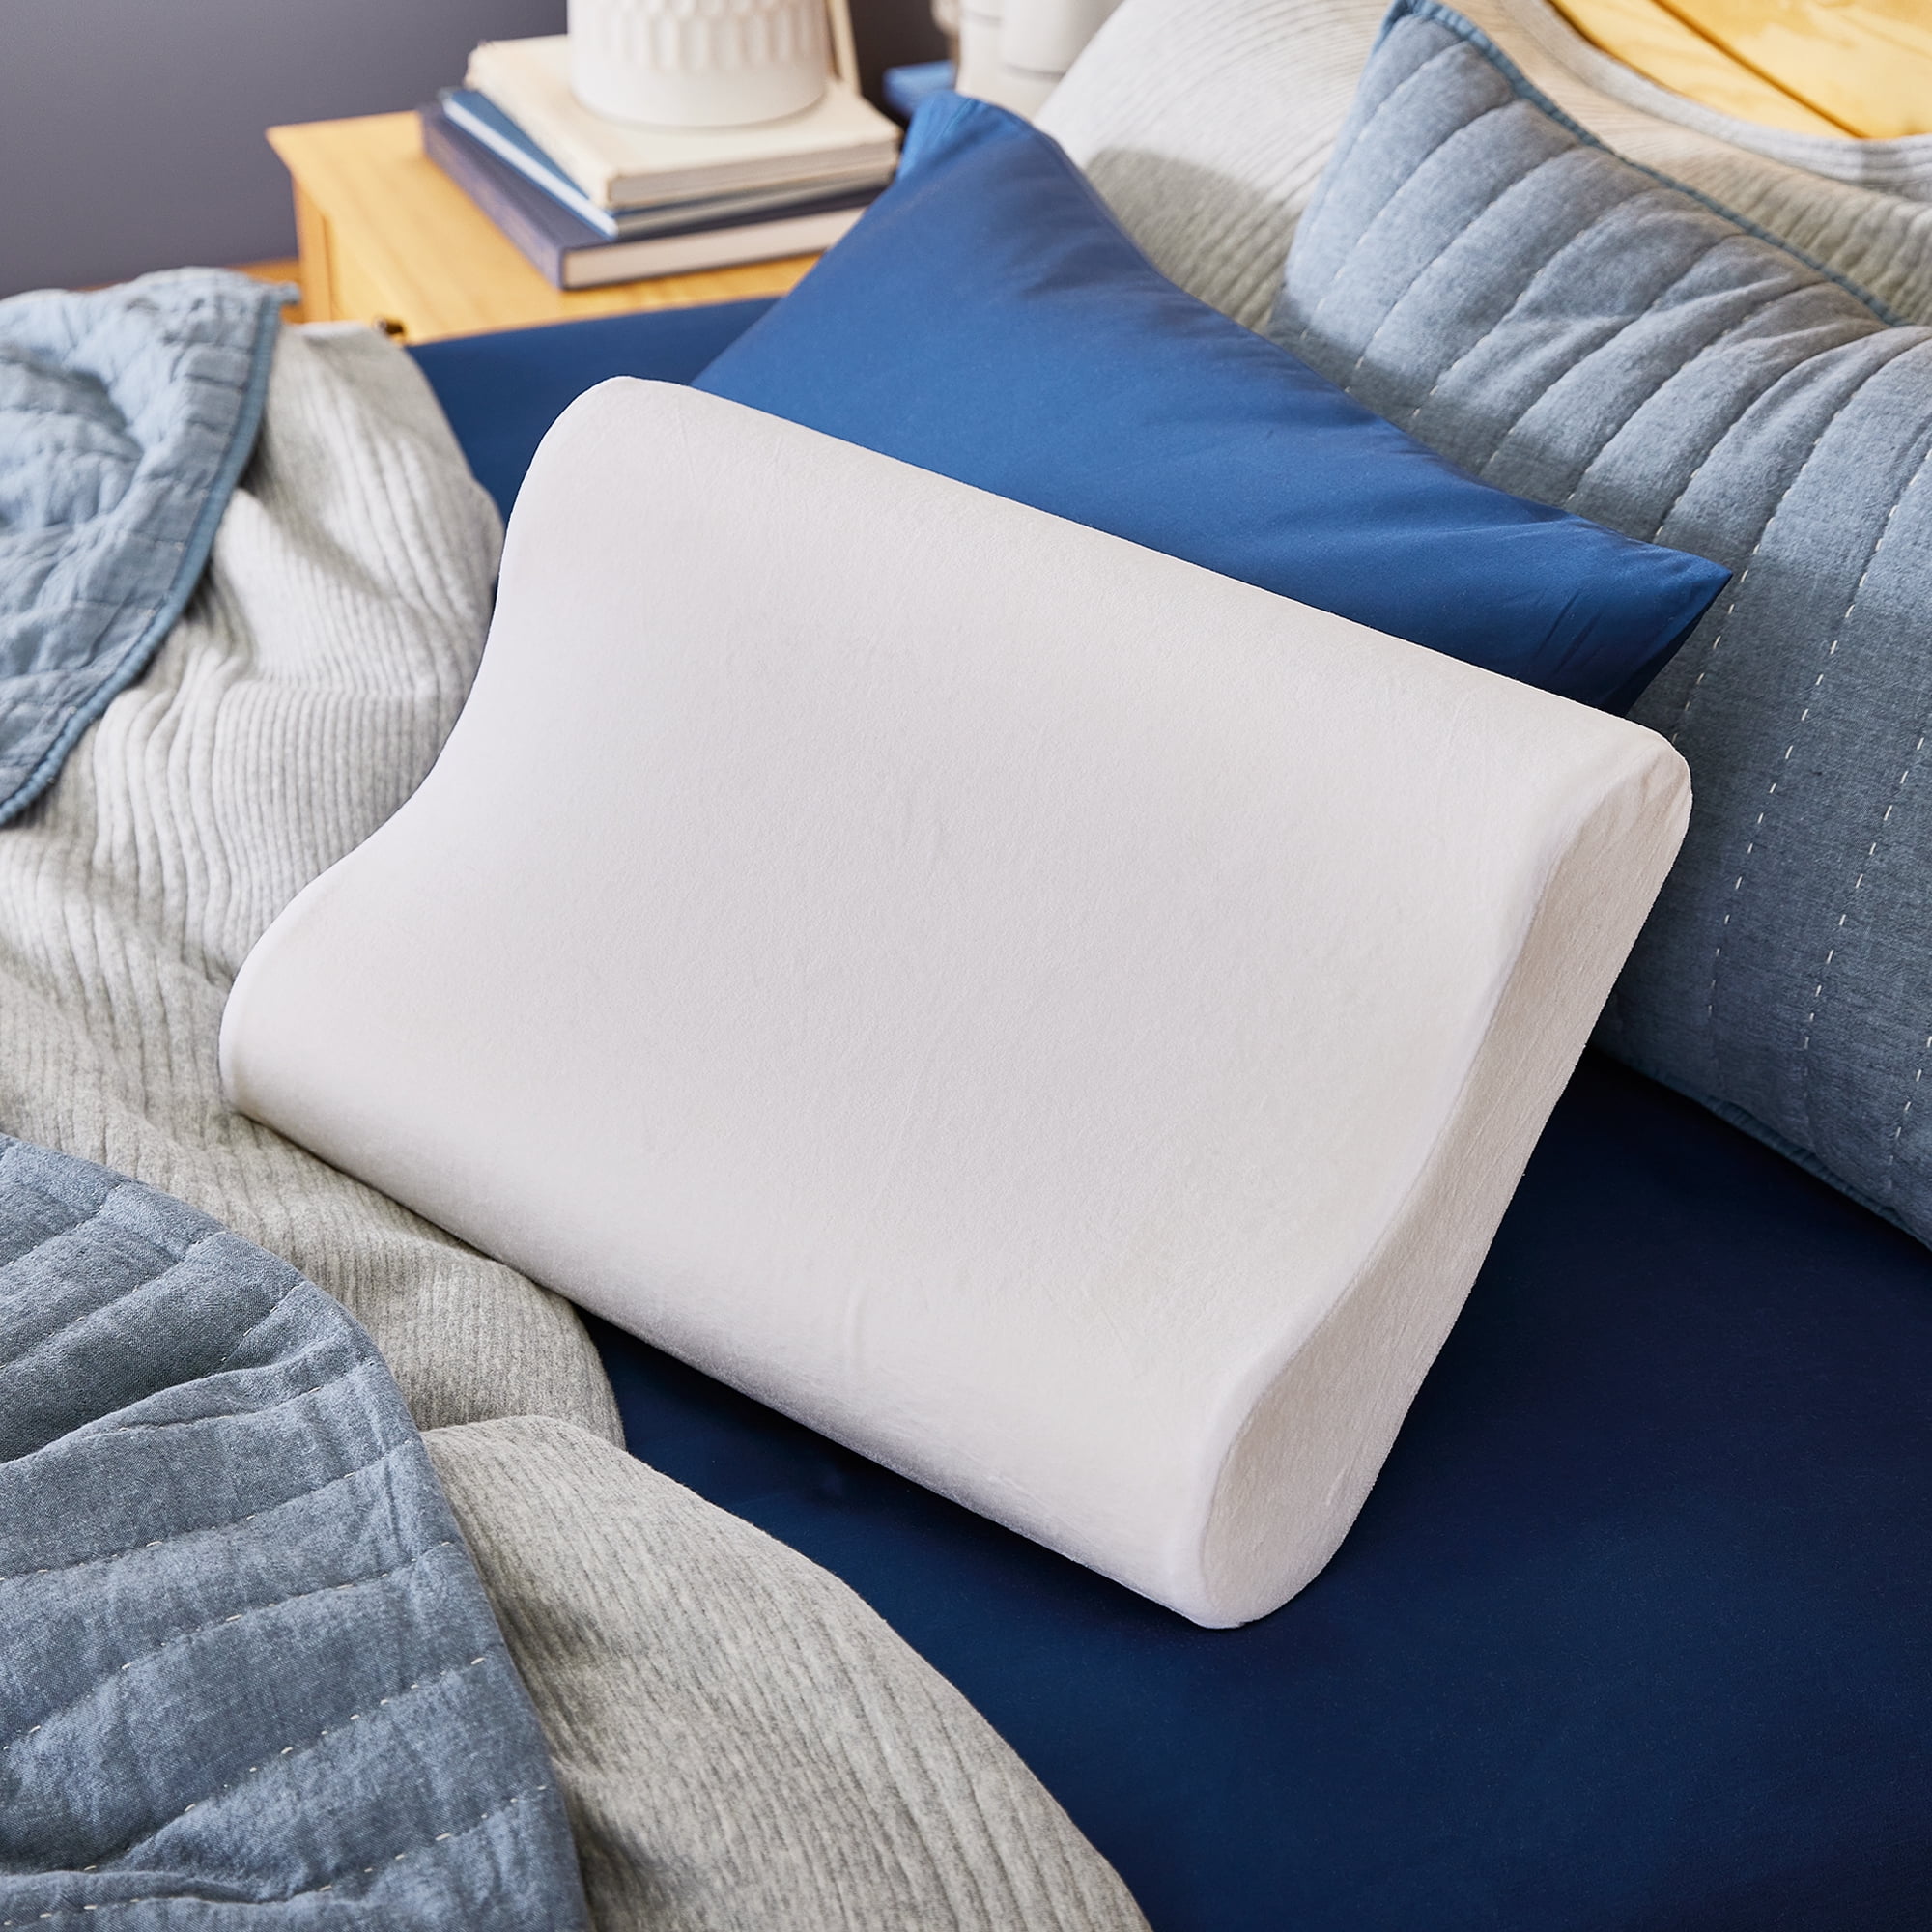 Memory Foam Pillow, Quality Pillows